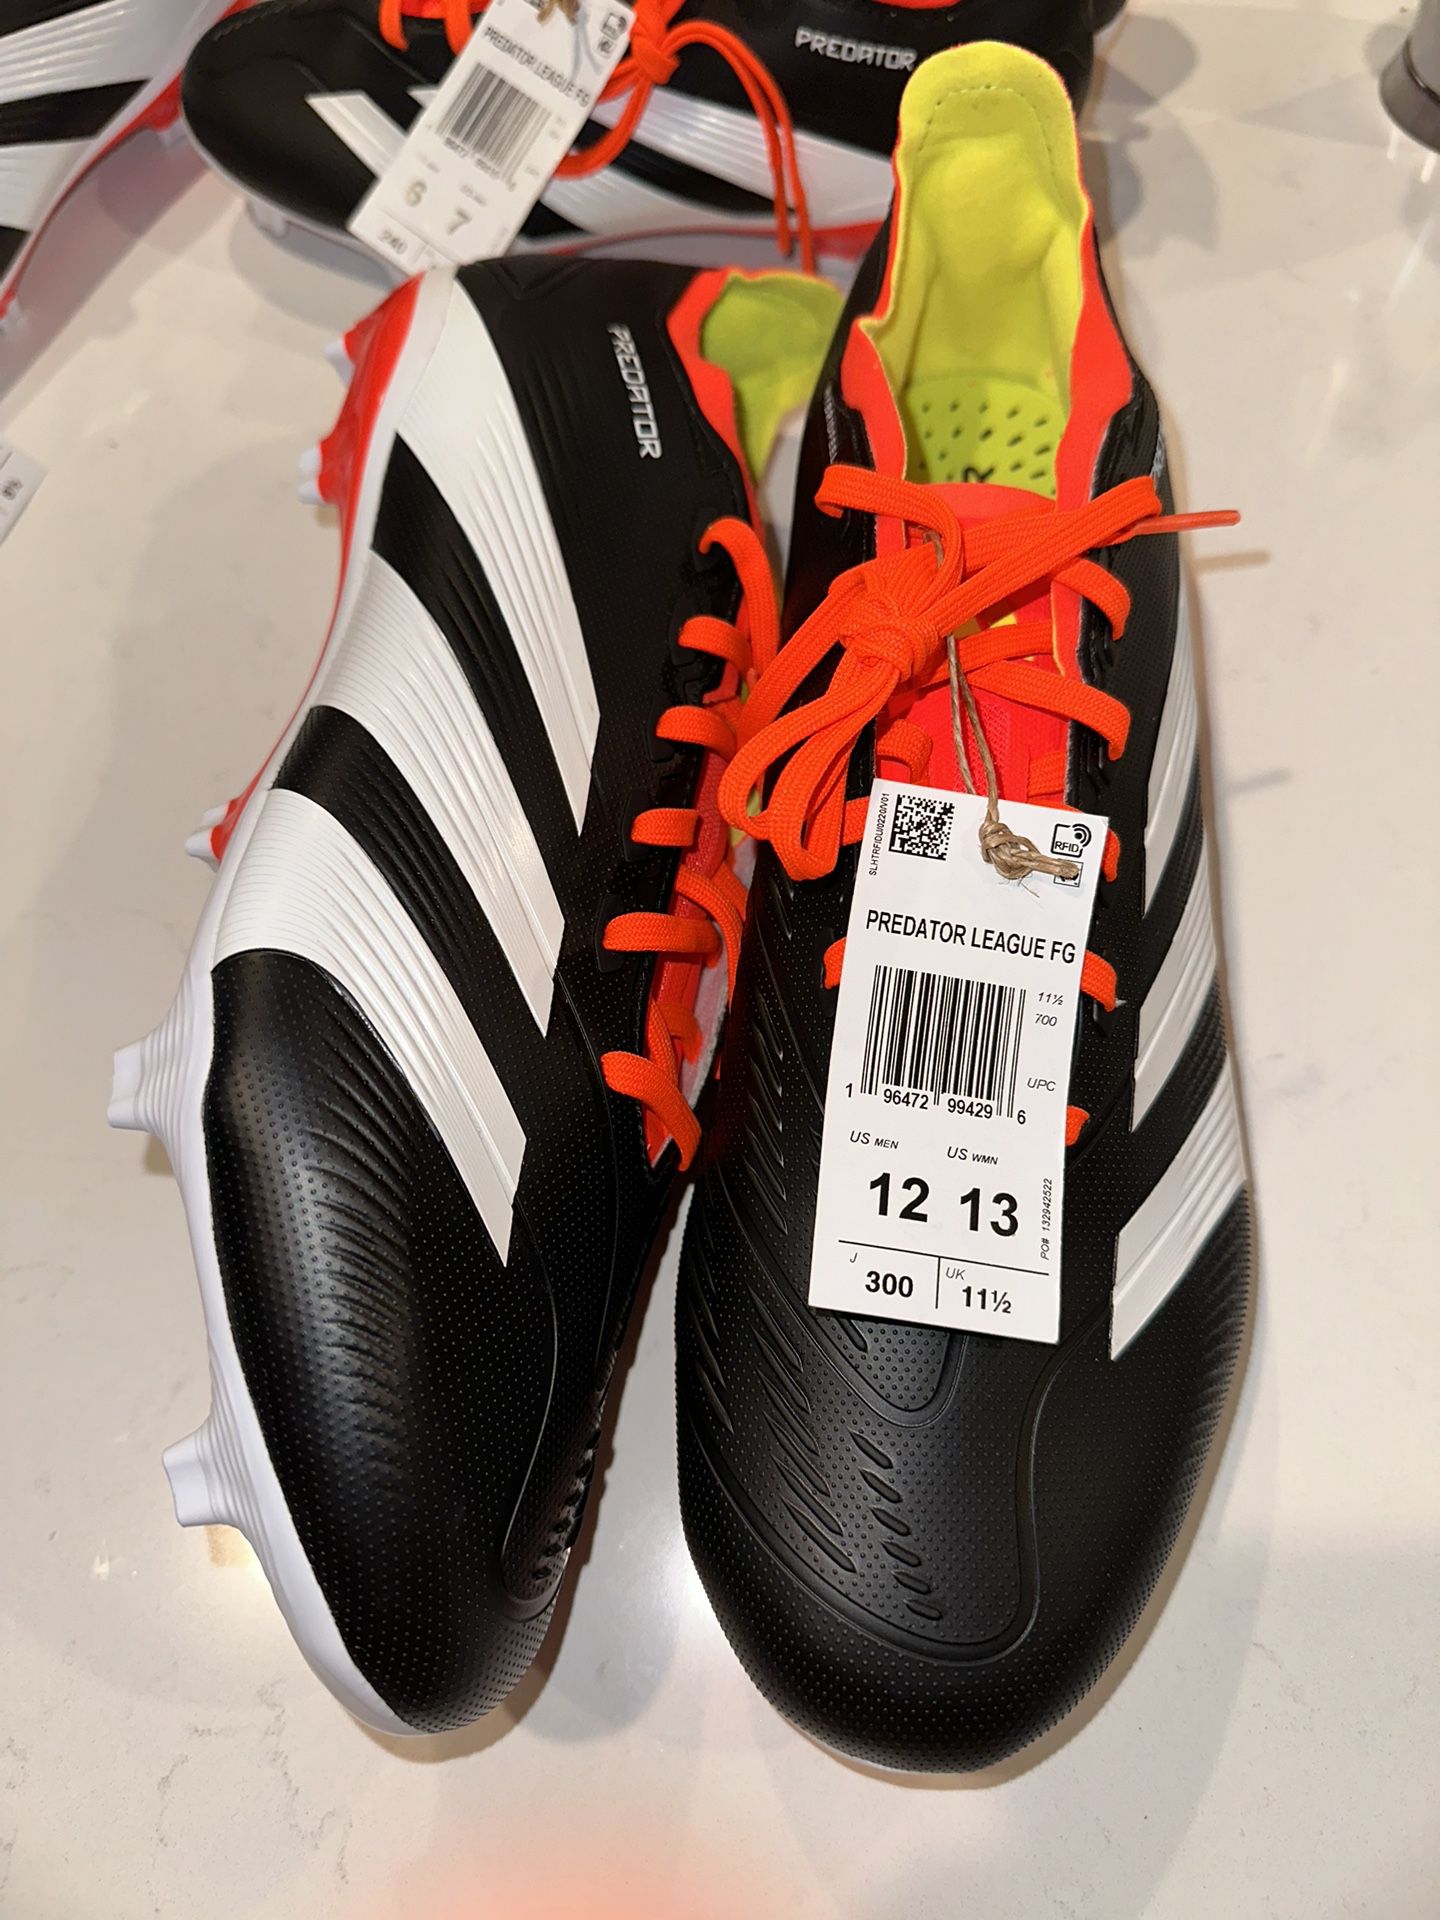 Adidas Predator League FG Soccer Cleats Size 12